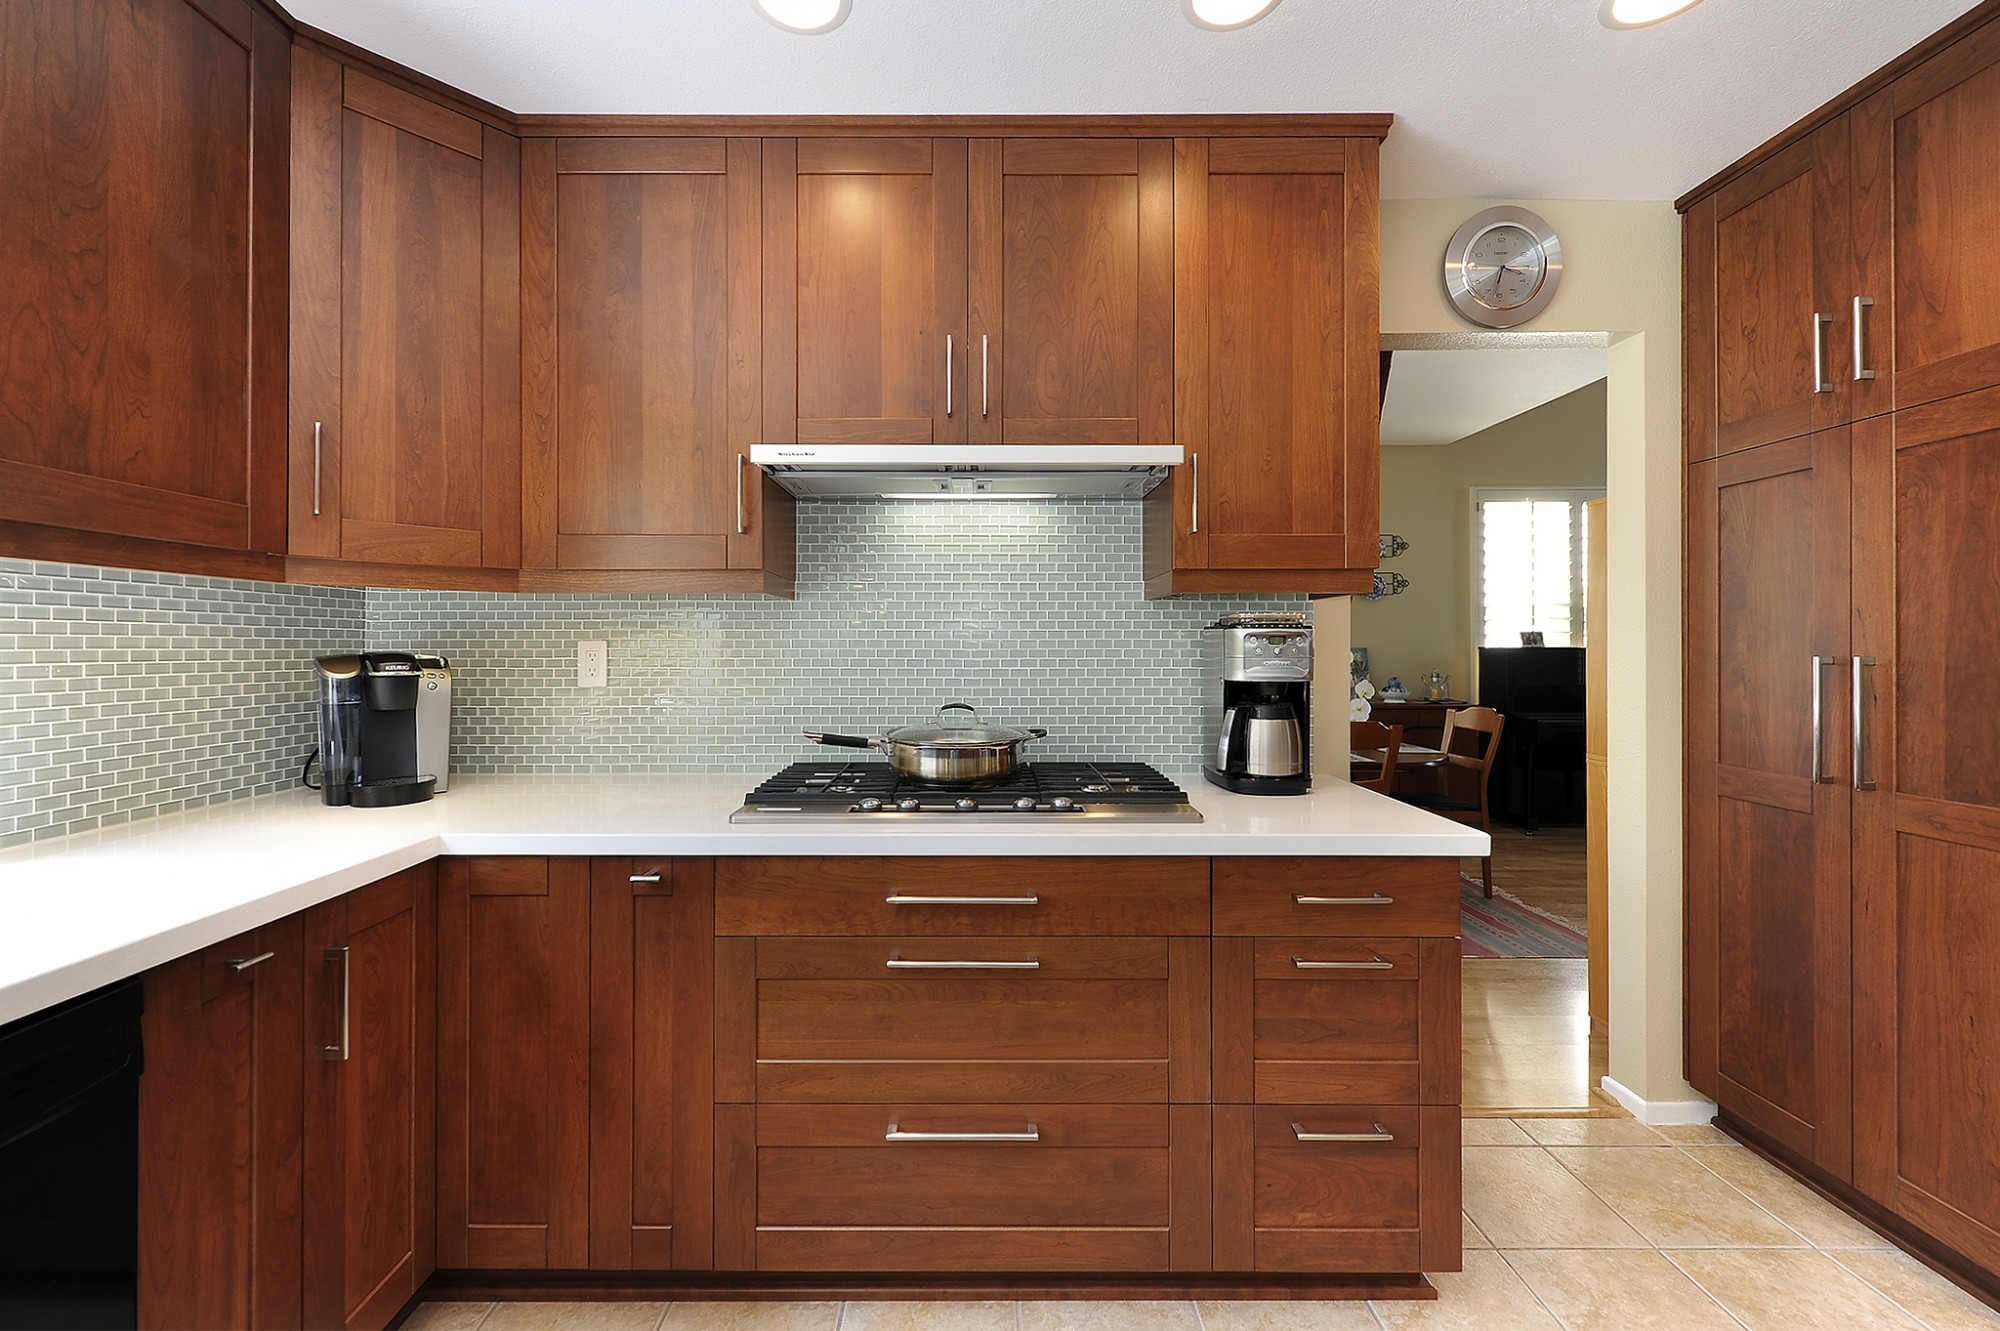 Kitchen Cabinet Sets
 Wooden Kitchen Sets Inspiration – HomesFeed